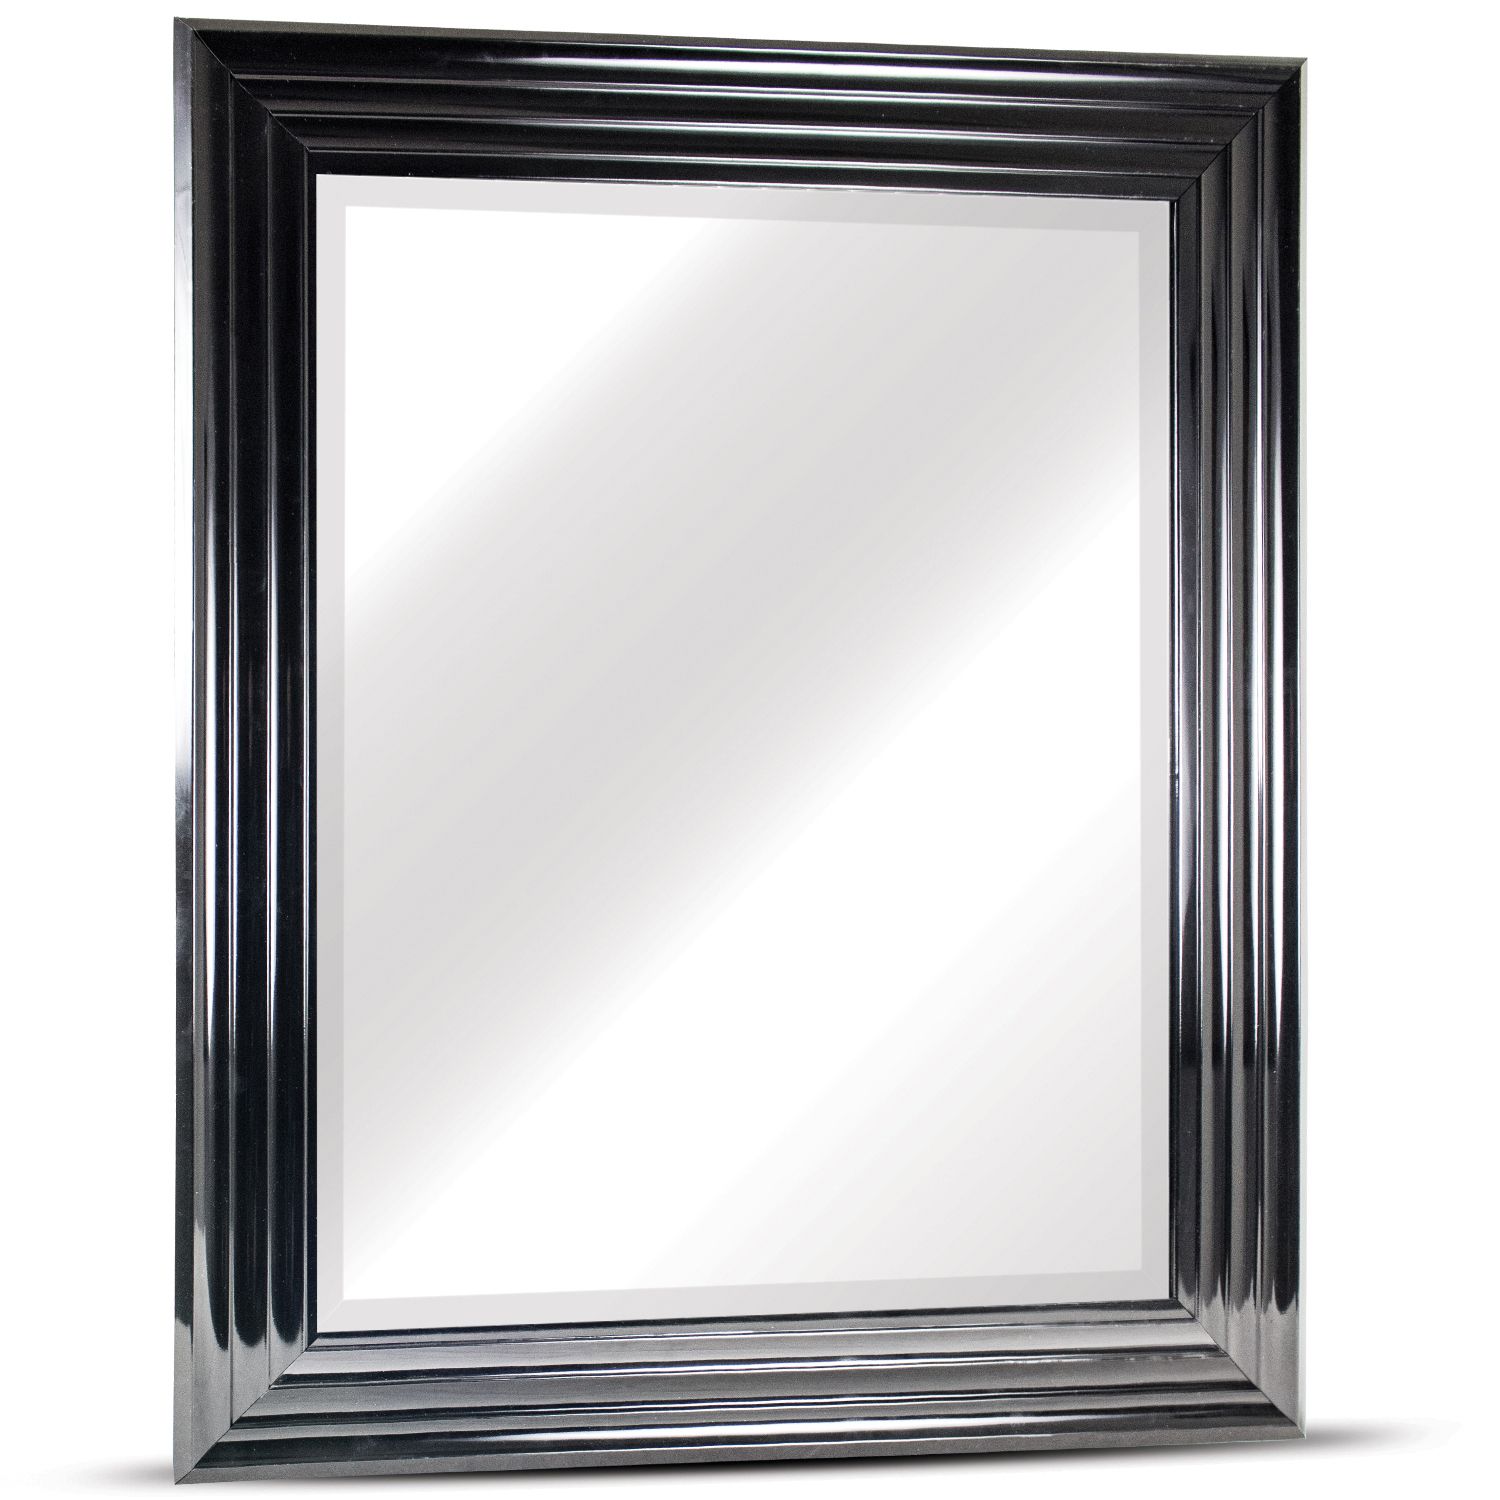 Black Everett Rectangular Wall Vanity Mirror – Pier1 For Black Beaded Rectangular Wall Mirrors (View 14 of 15)